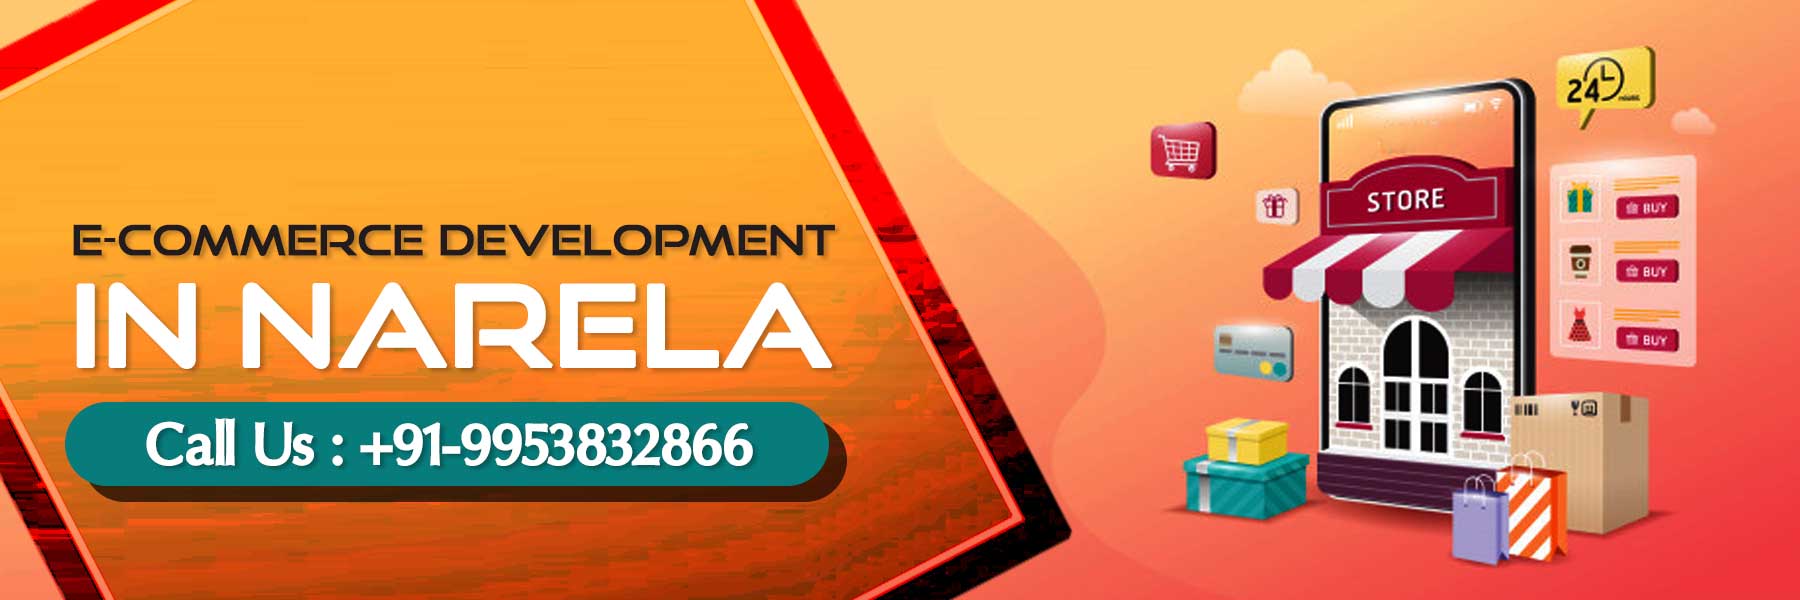 ecommerce development in Narela